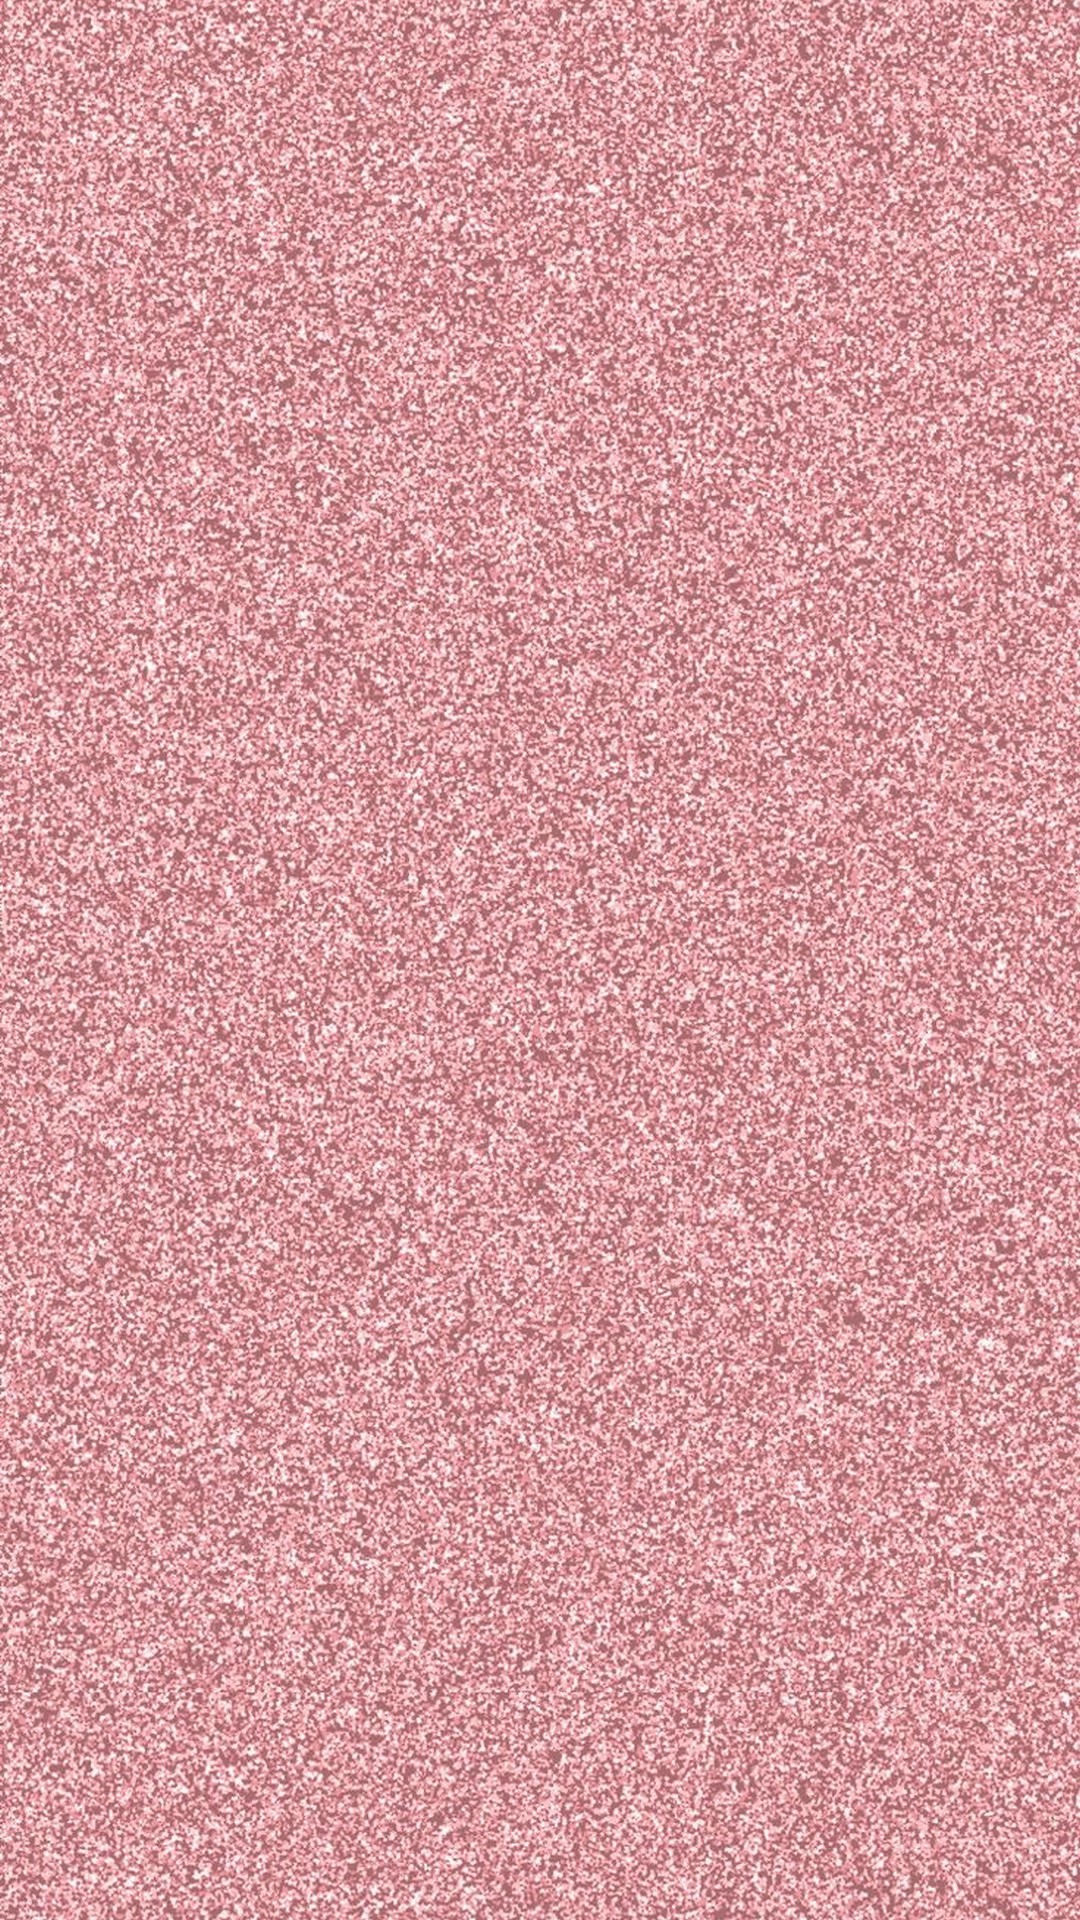 1080x1920, Iphone Wallpaper Rose Gold Glitter Mit Auflã¶sung - Iphone Sfondo Rosa - HD Wallpaper 